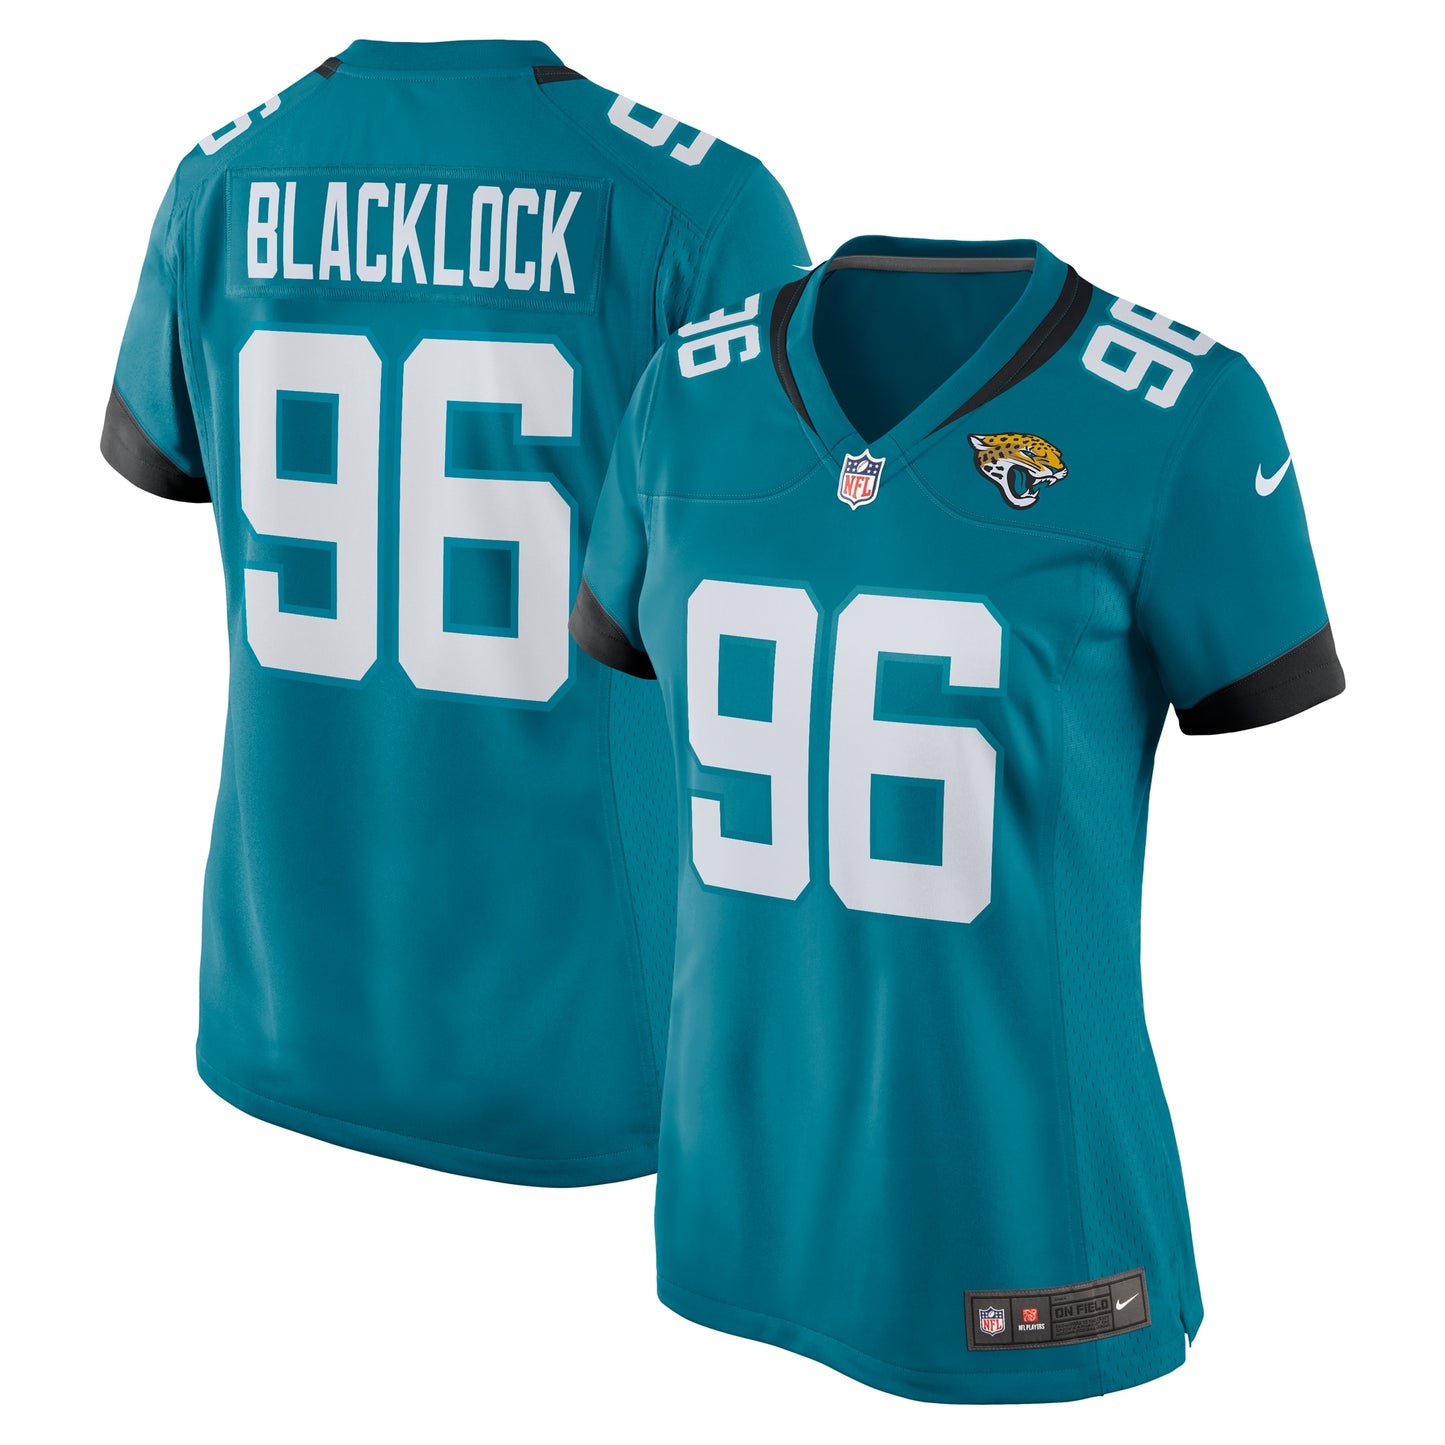 Ross Blacklock Jacksonville Jaguars Nike Women's Team Game Jersey - Teal